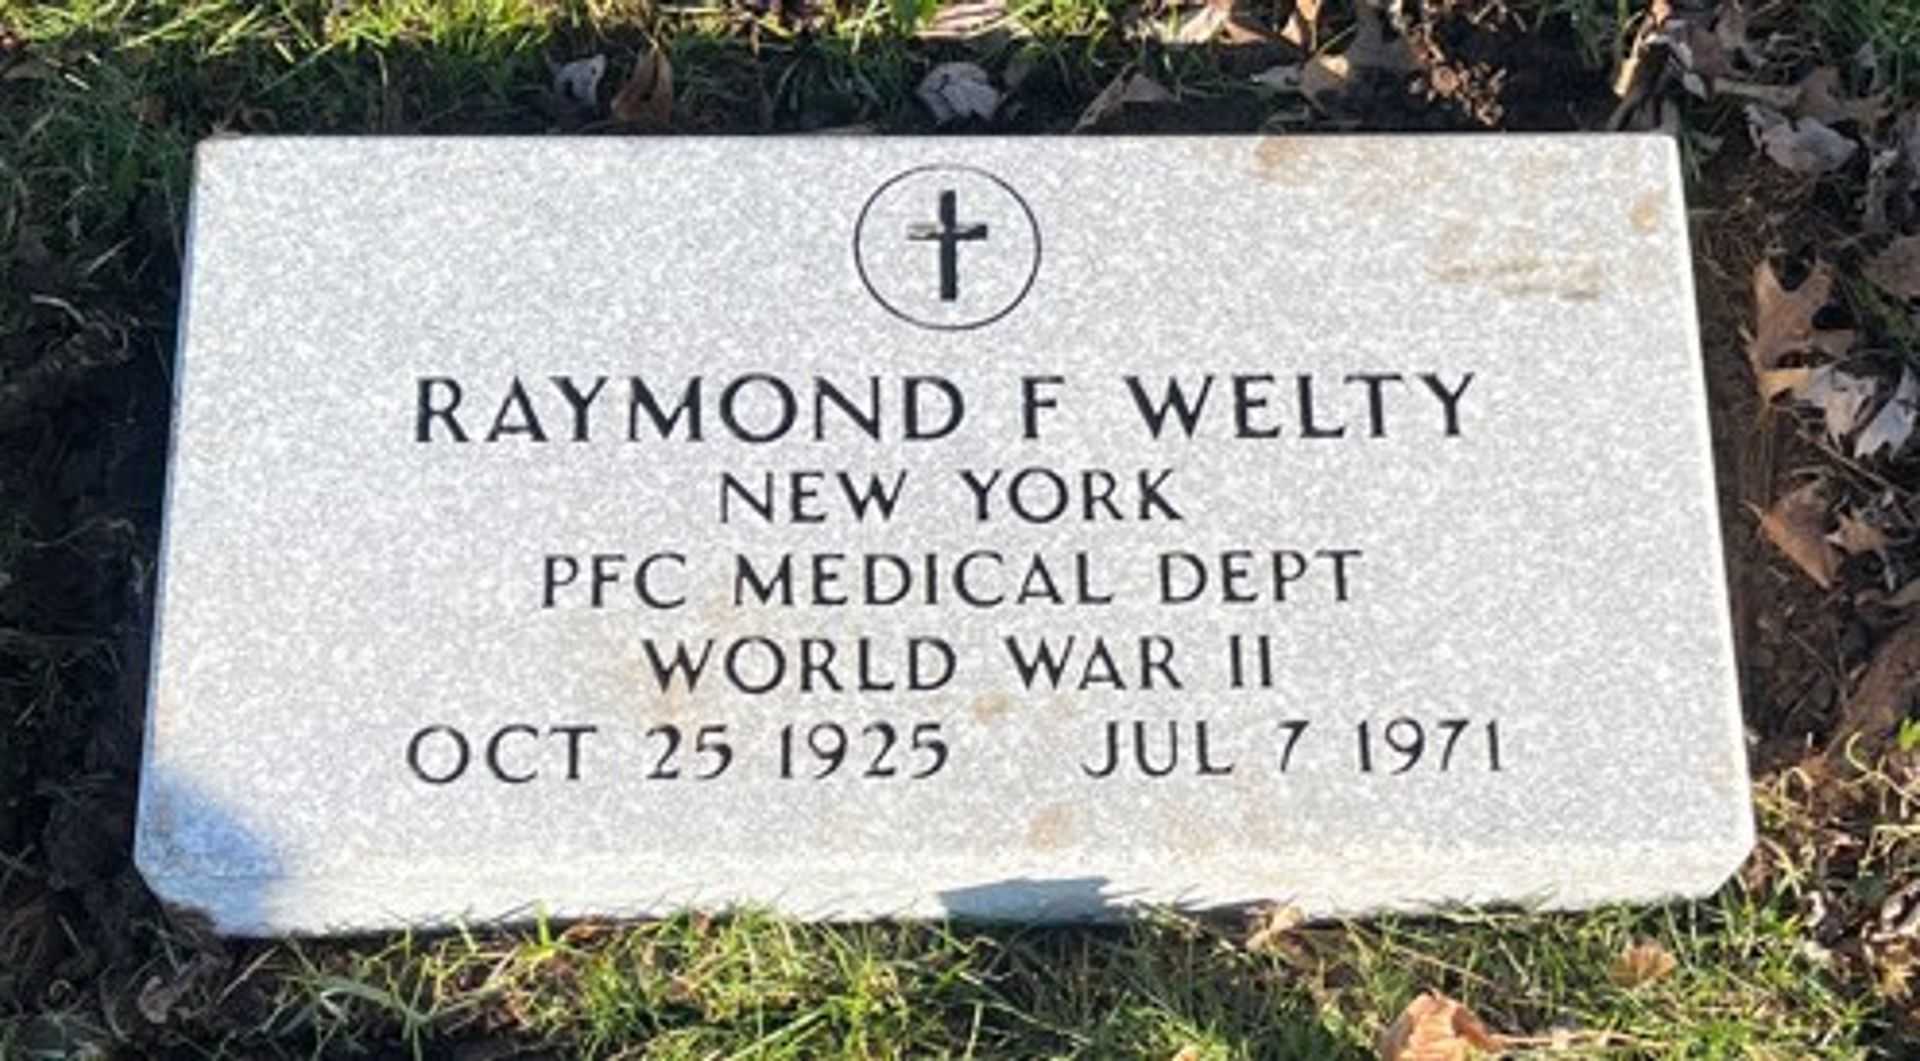 Raymond F. Welty's grave. Photo 2